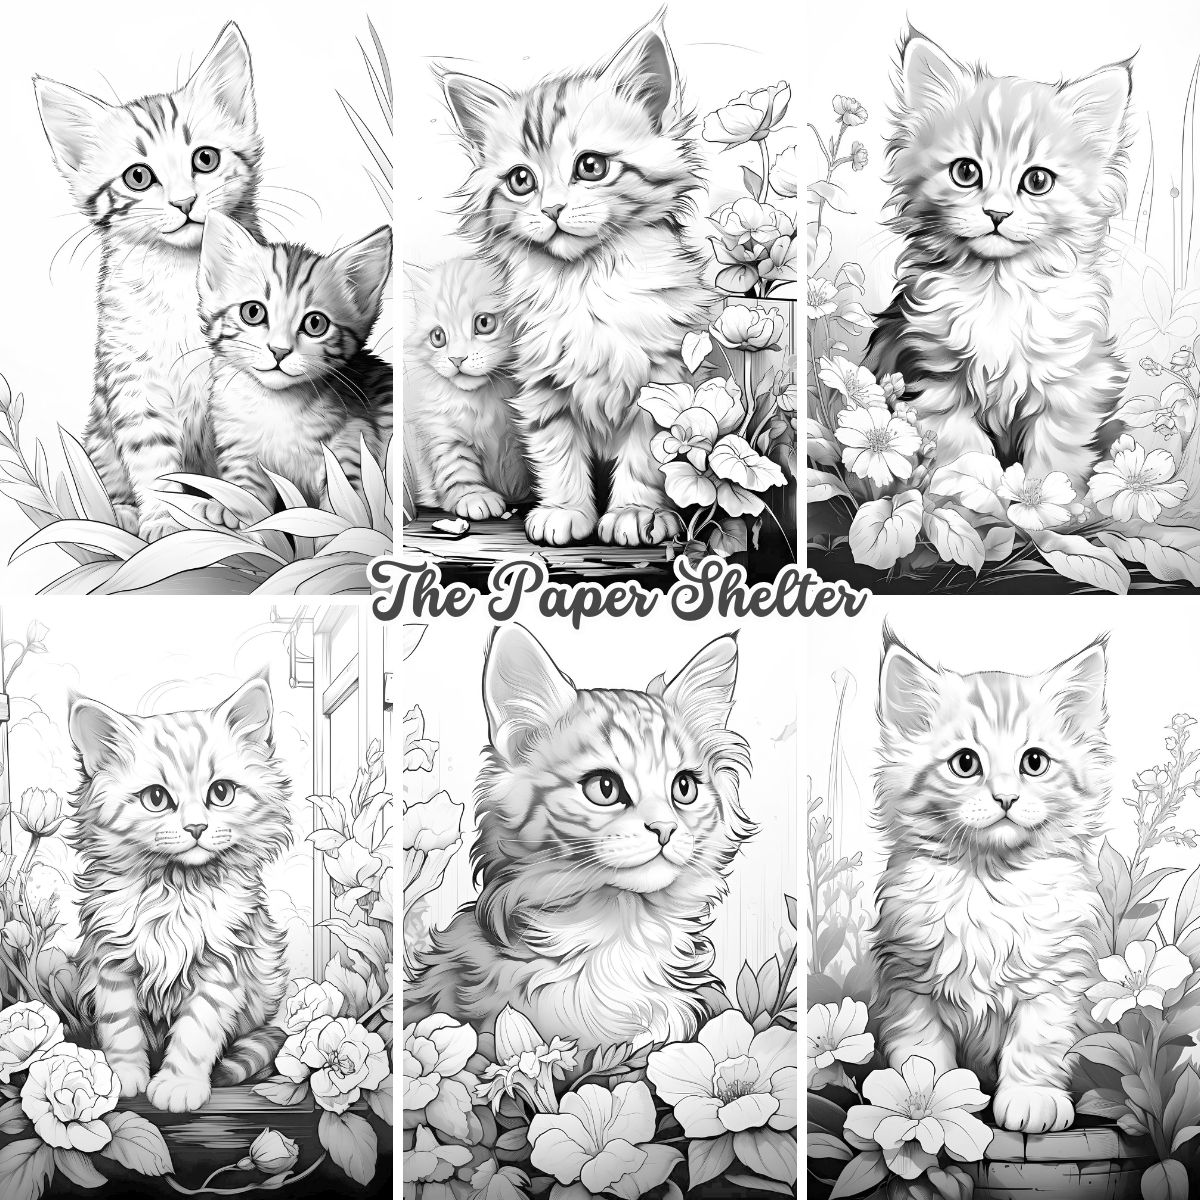 Sweet Kittens - Digital Coloring Book